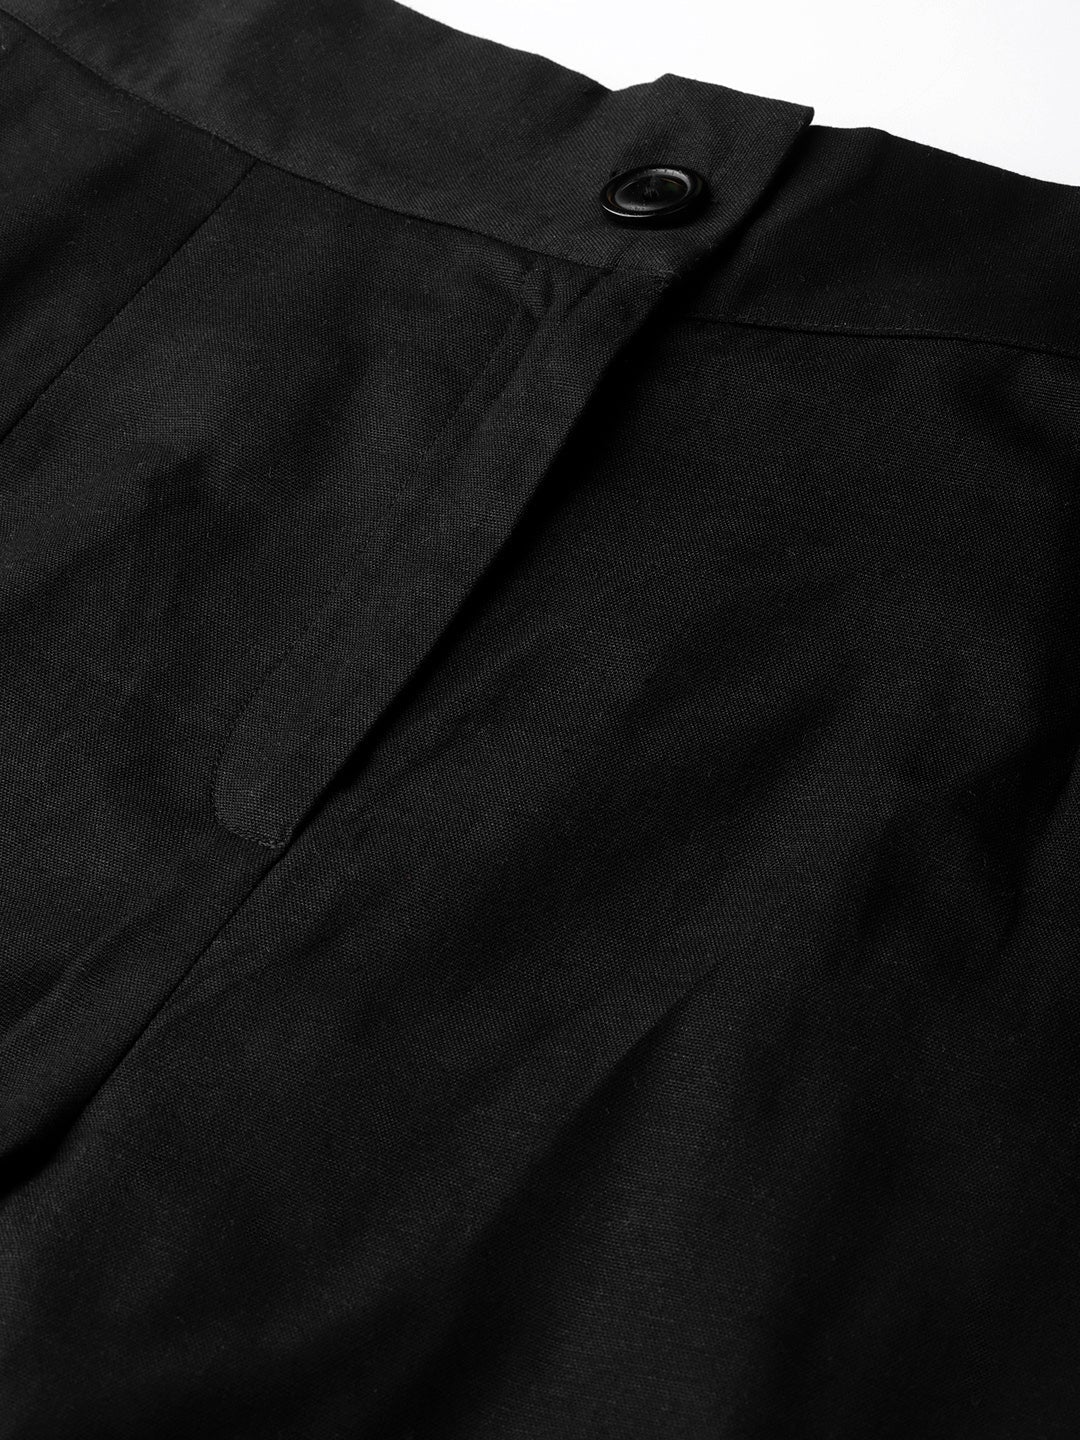 Black Cotton Flex Embellished Hakoba Pants